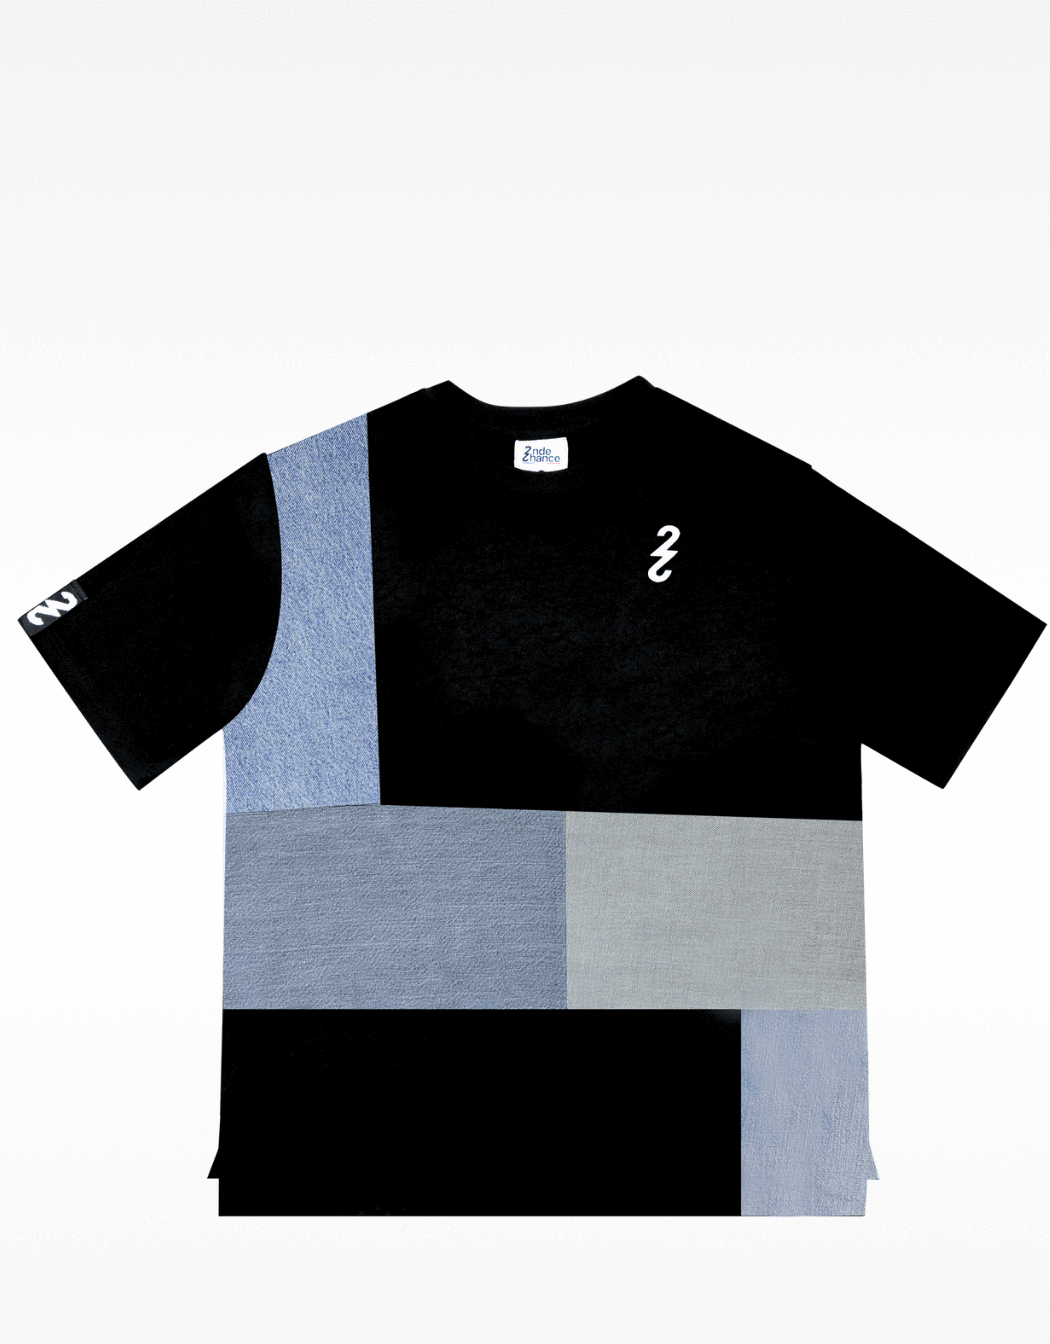 tee-shirt-2ndechance-jeans-colors-unique-upcycling-madeindijon-france-slow-fashion-devant